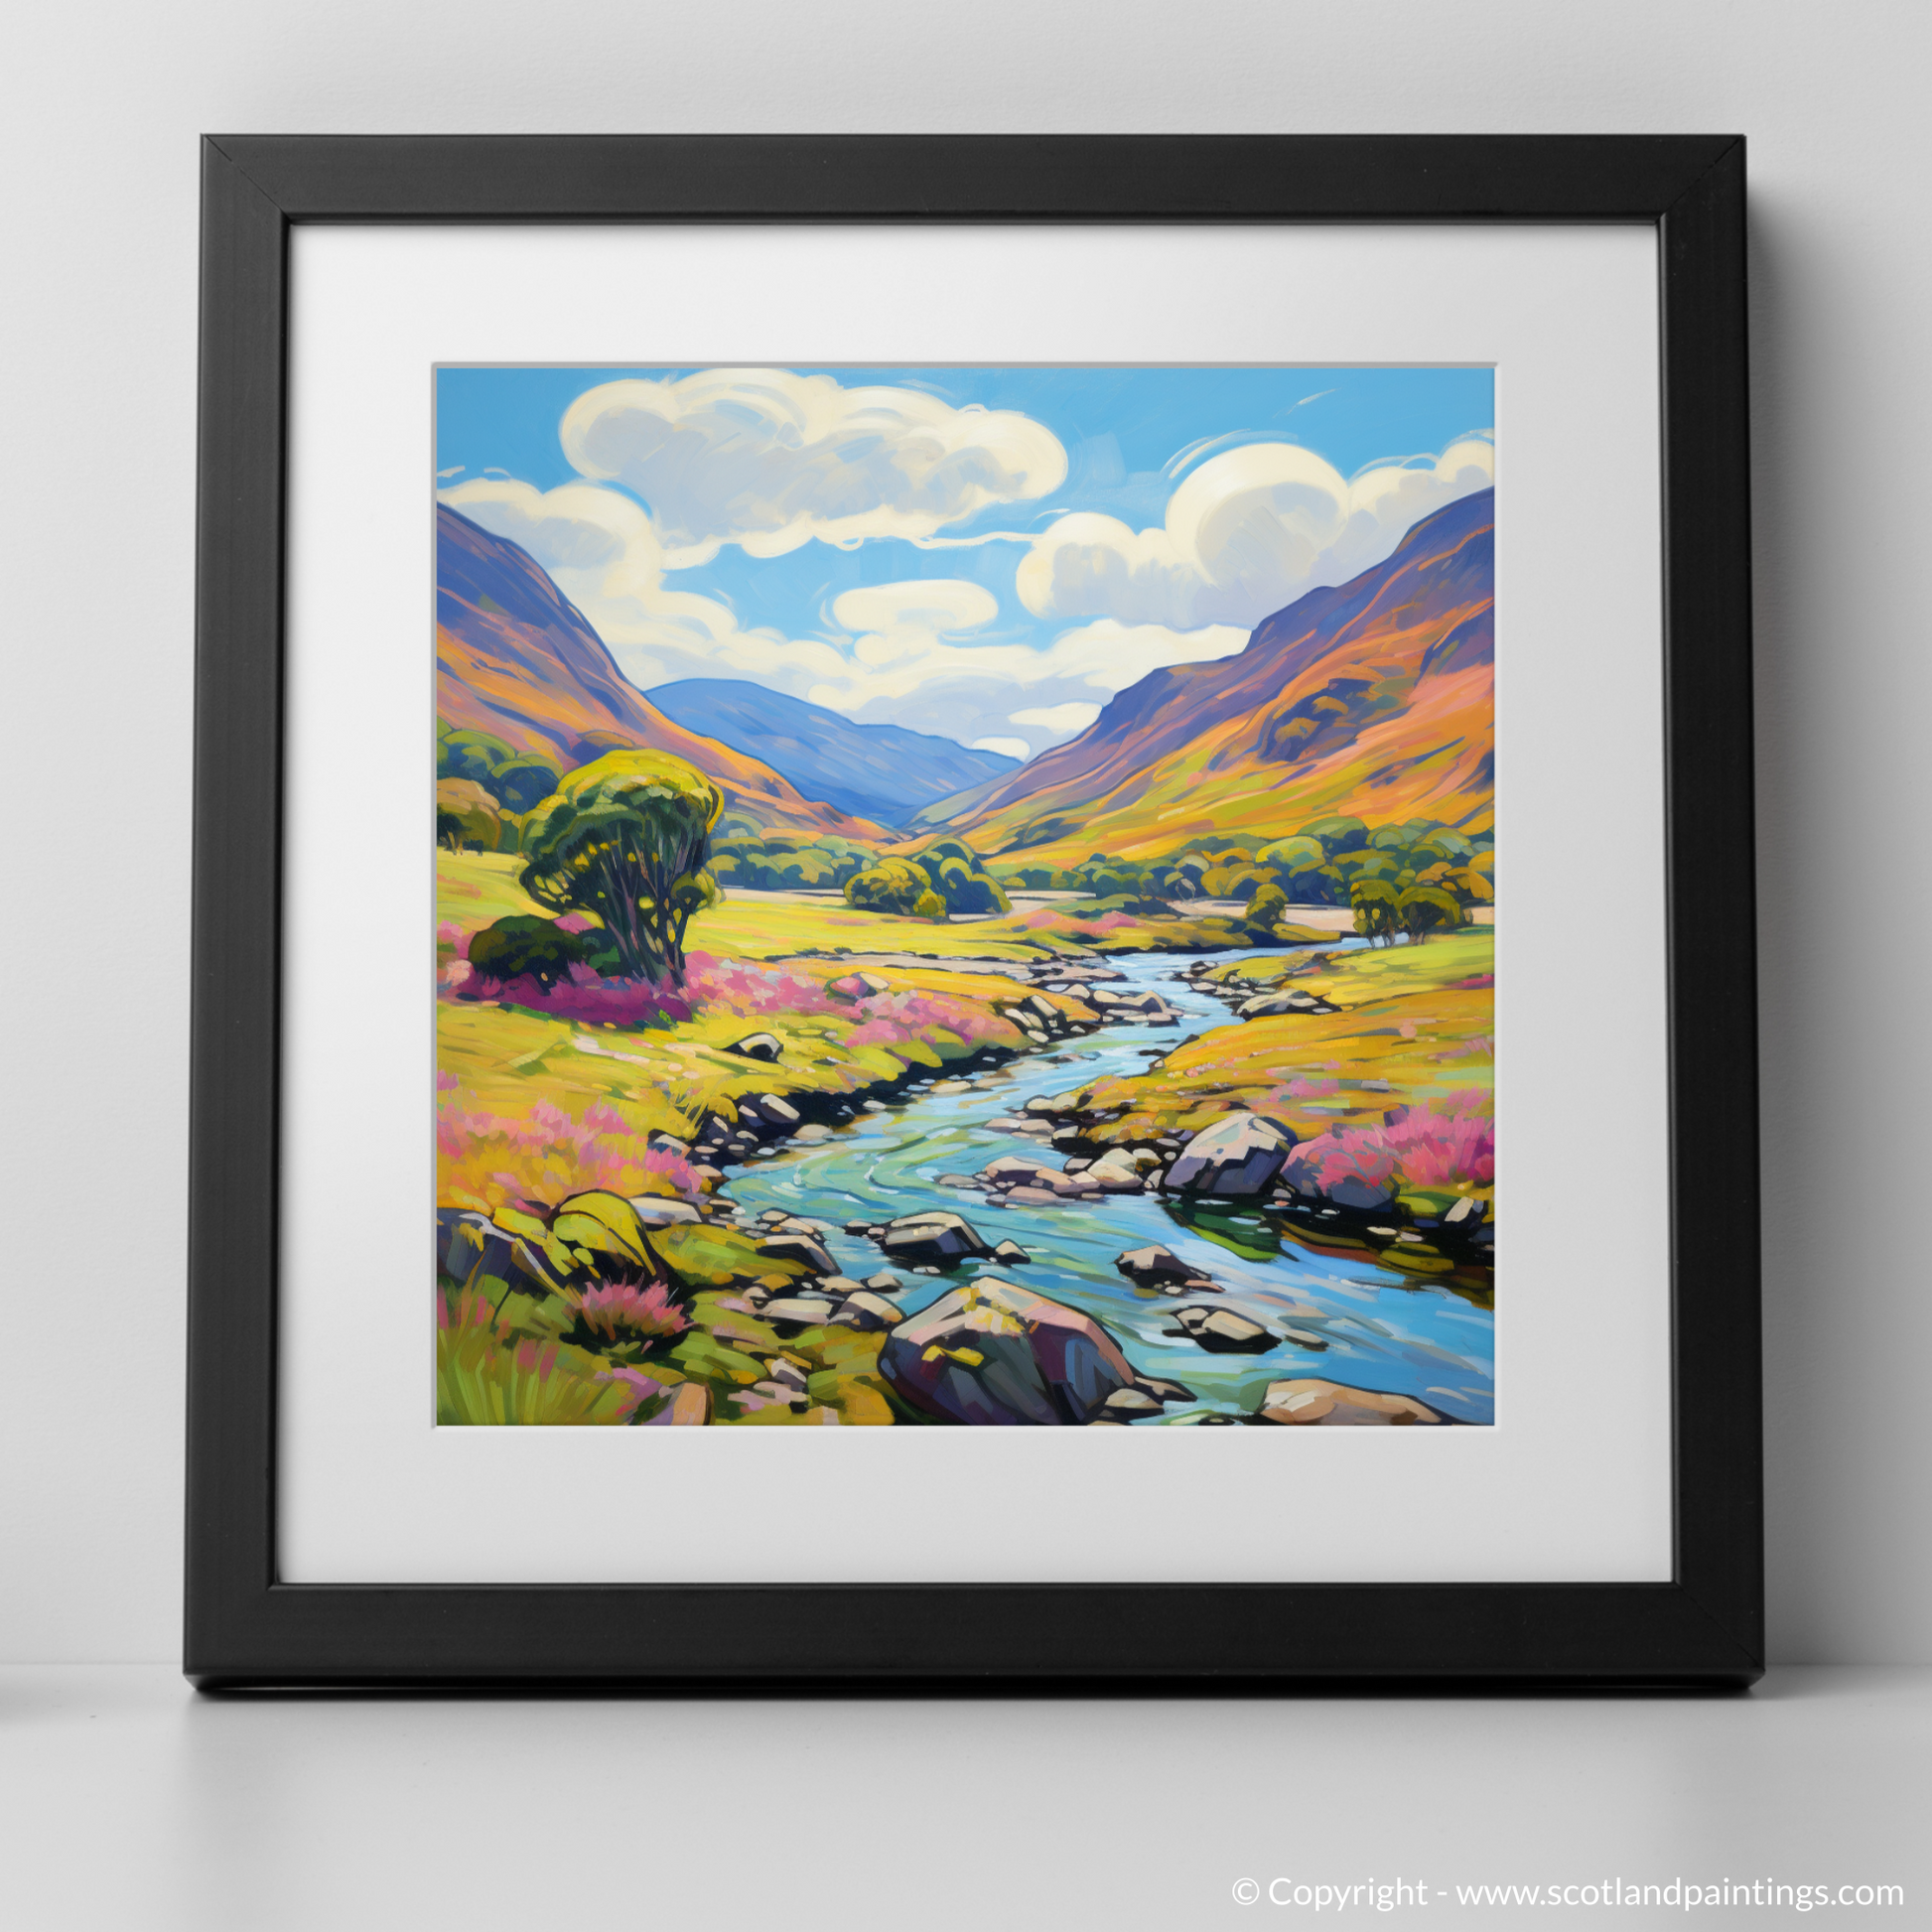 Art Print of Glen Feshie, Highlands in summer with a black frame